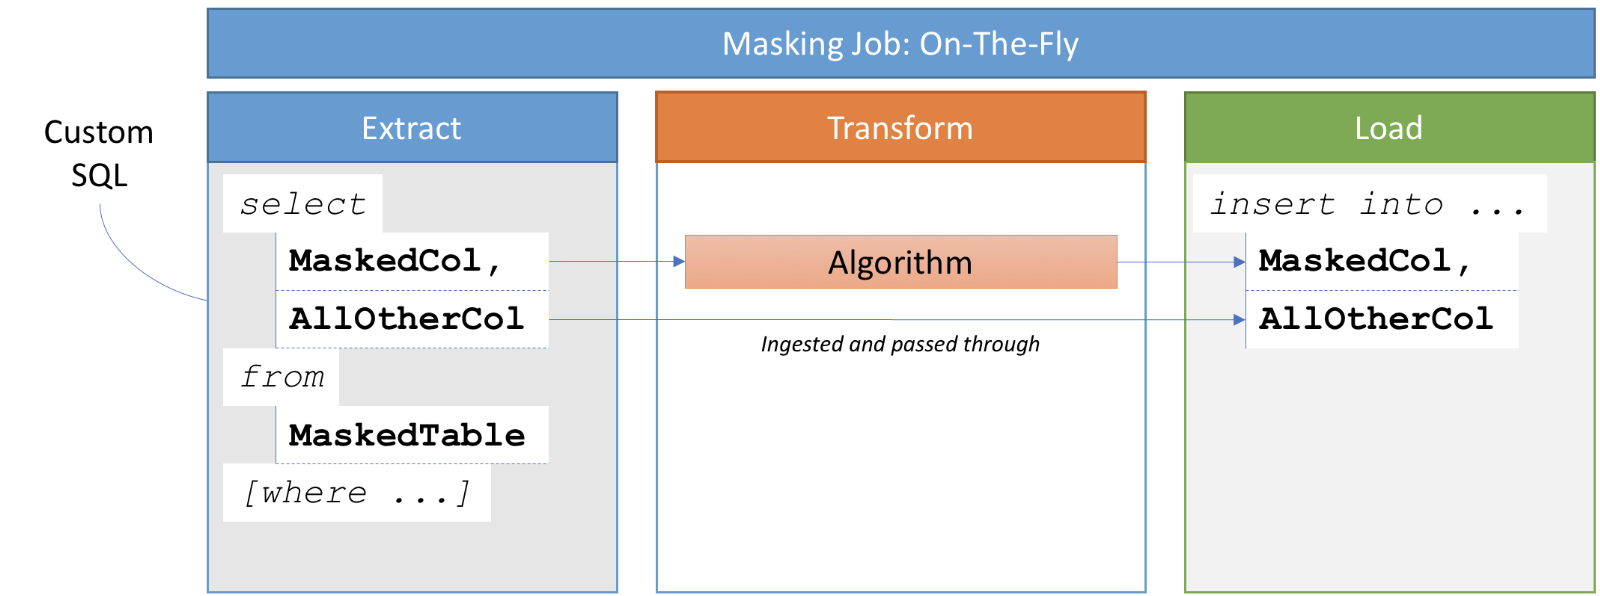 Masking - Custom SQL - On-The-Fly ver 3.png